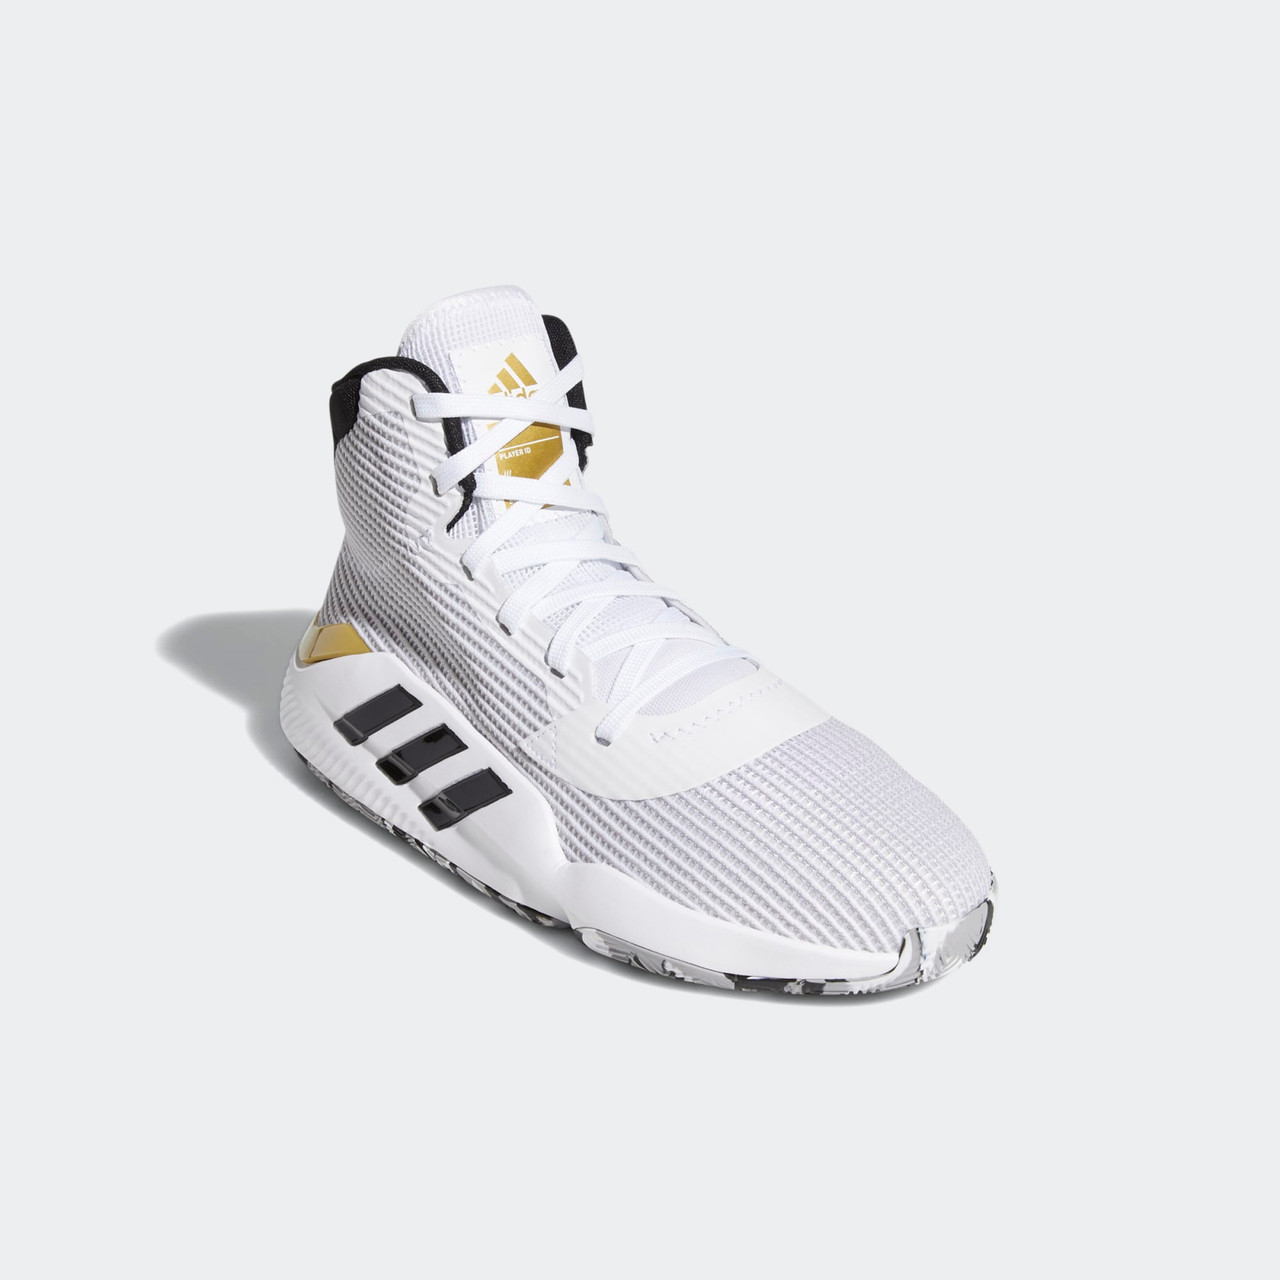 Adidas Men's Pro Bounce 2019 Basketball Shoe | vlr.eng.br